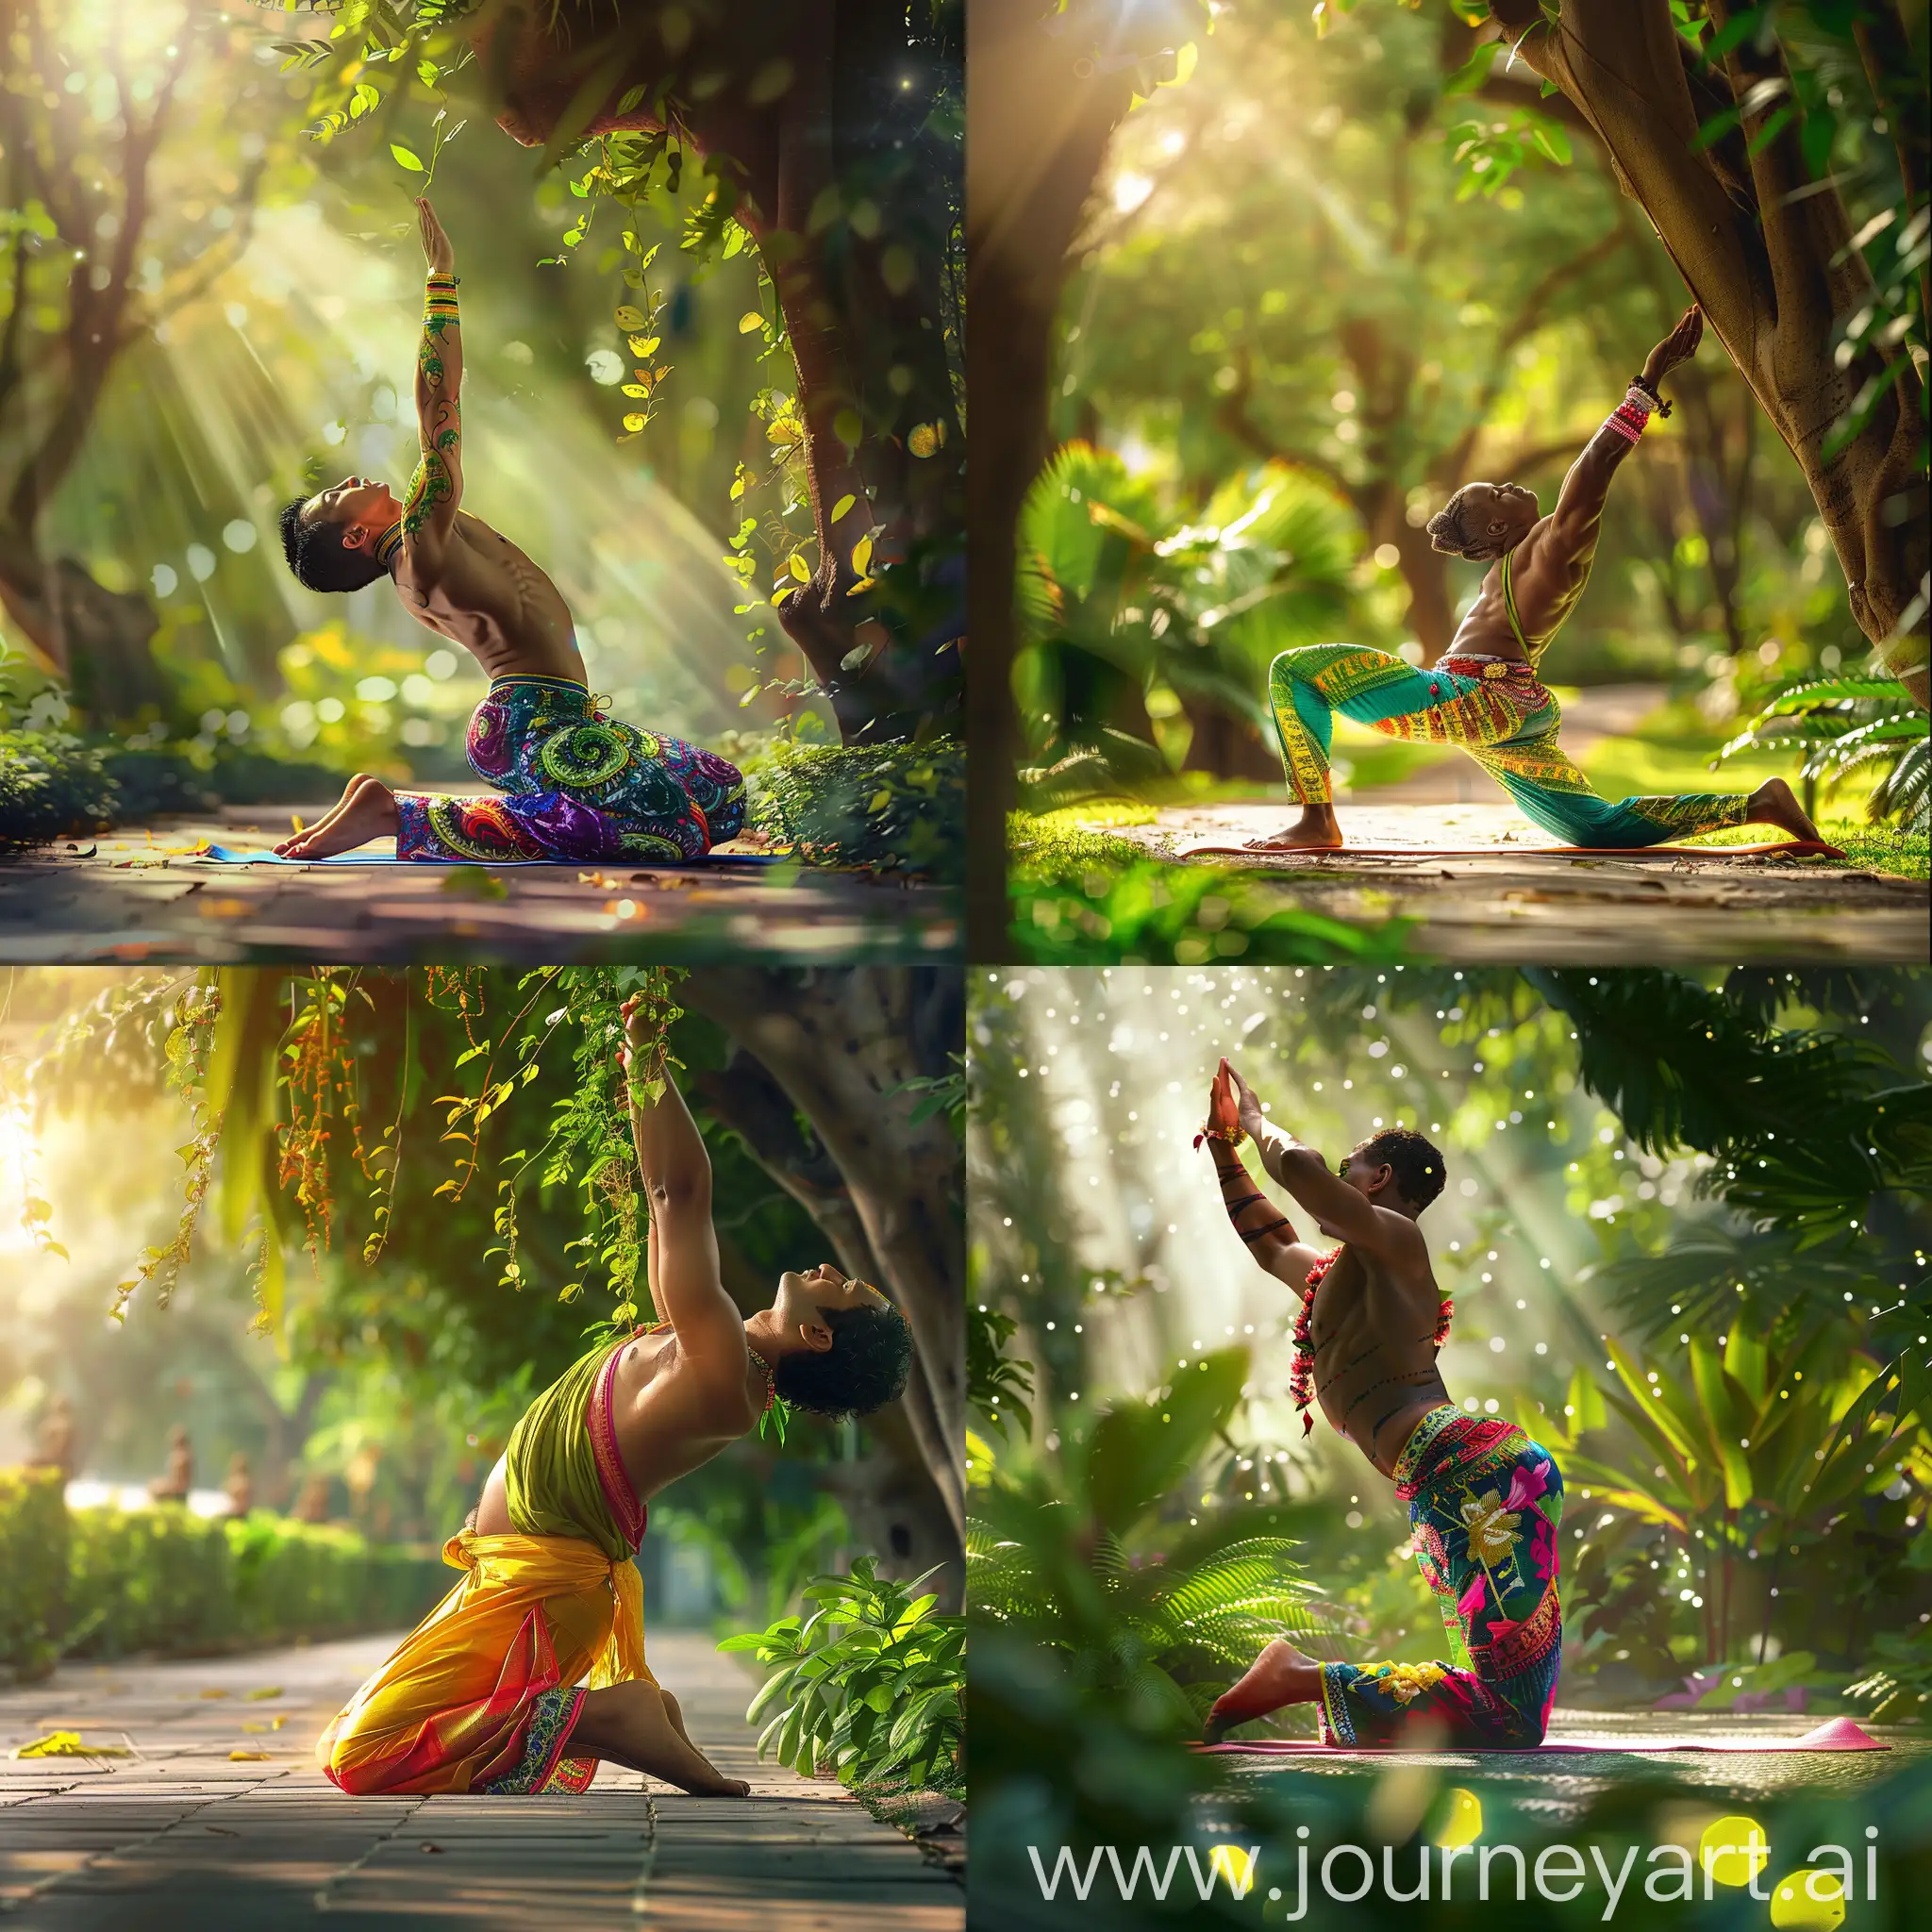 Vibrant-Attire-Yoga-Serene-Park-Meditation-in-Lush-Greenery